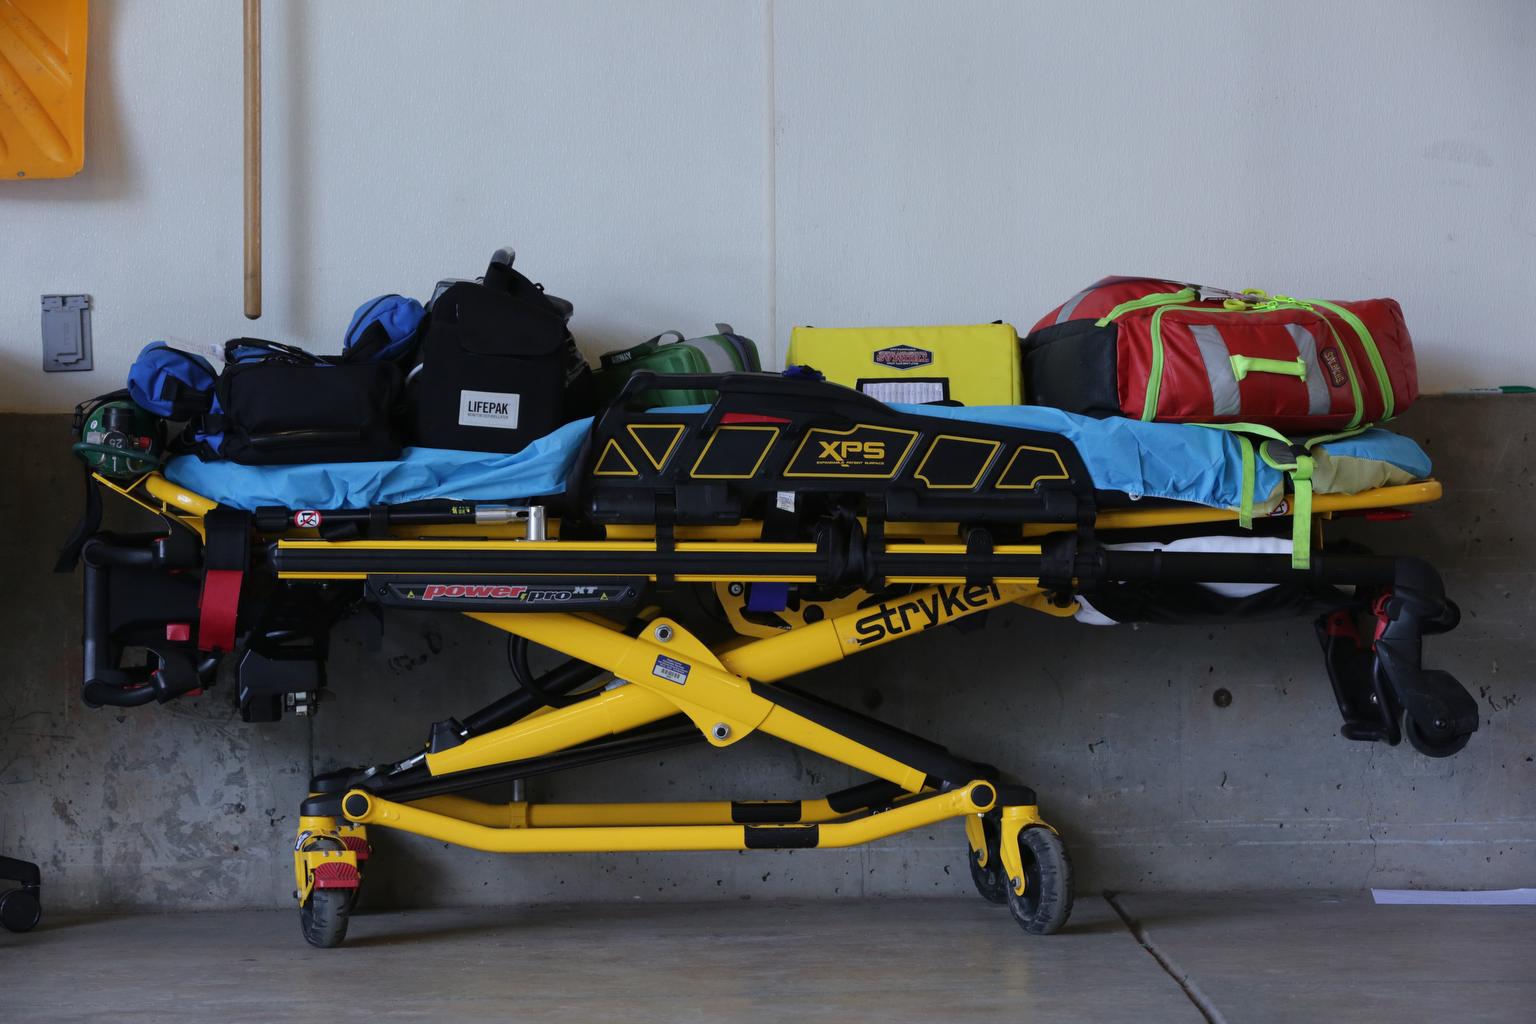 Eagle County Paramedics in Avon, Colorado